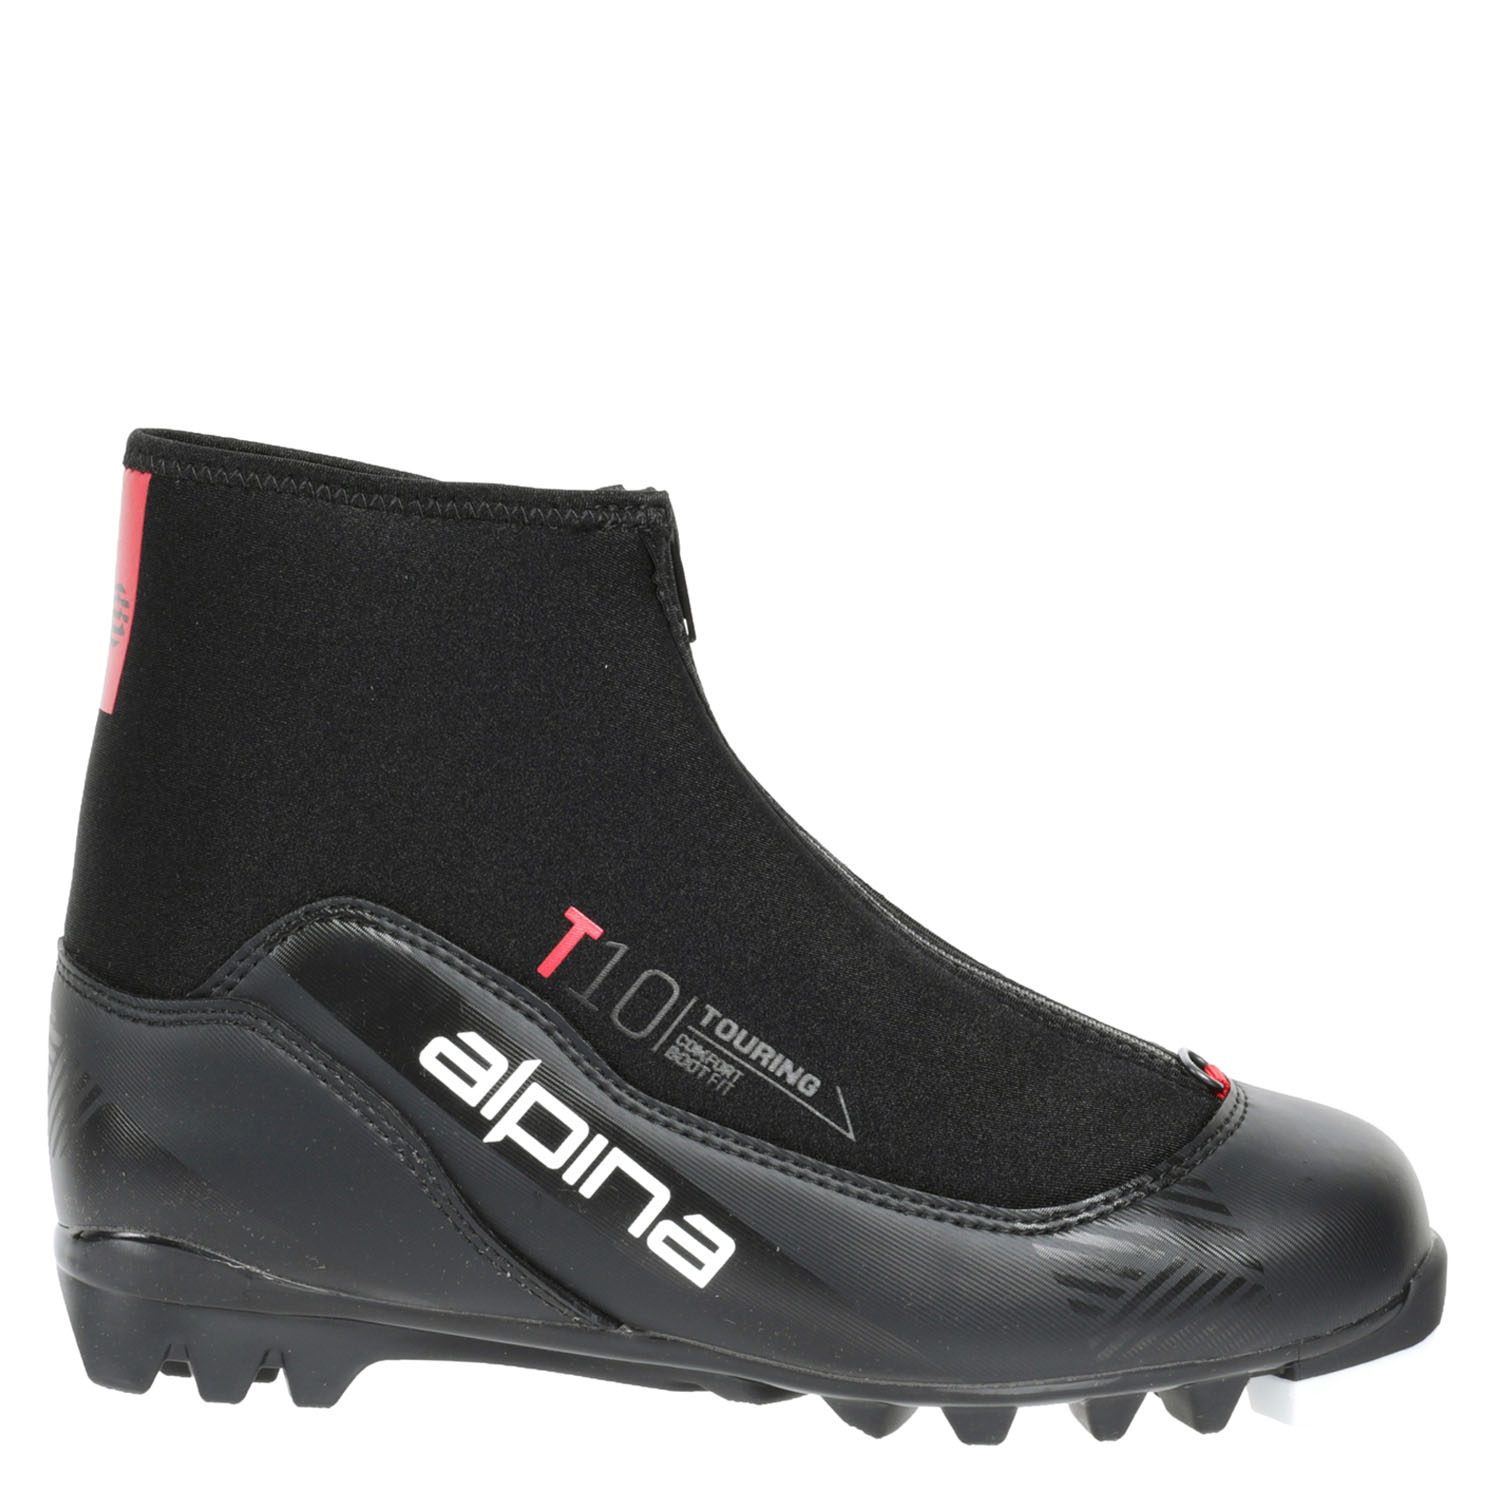 Лыжные ботинки Alpina. T 10 Jr Black / Red